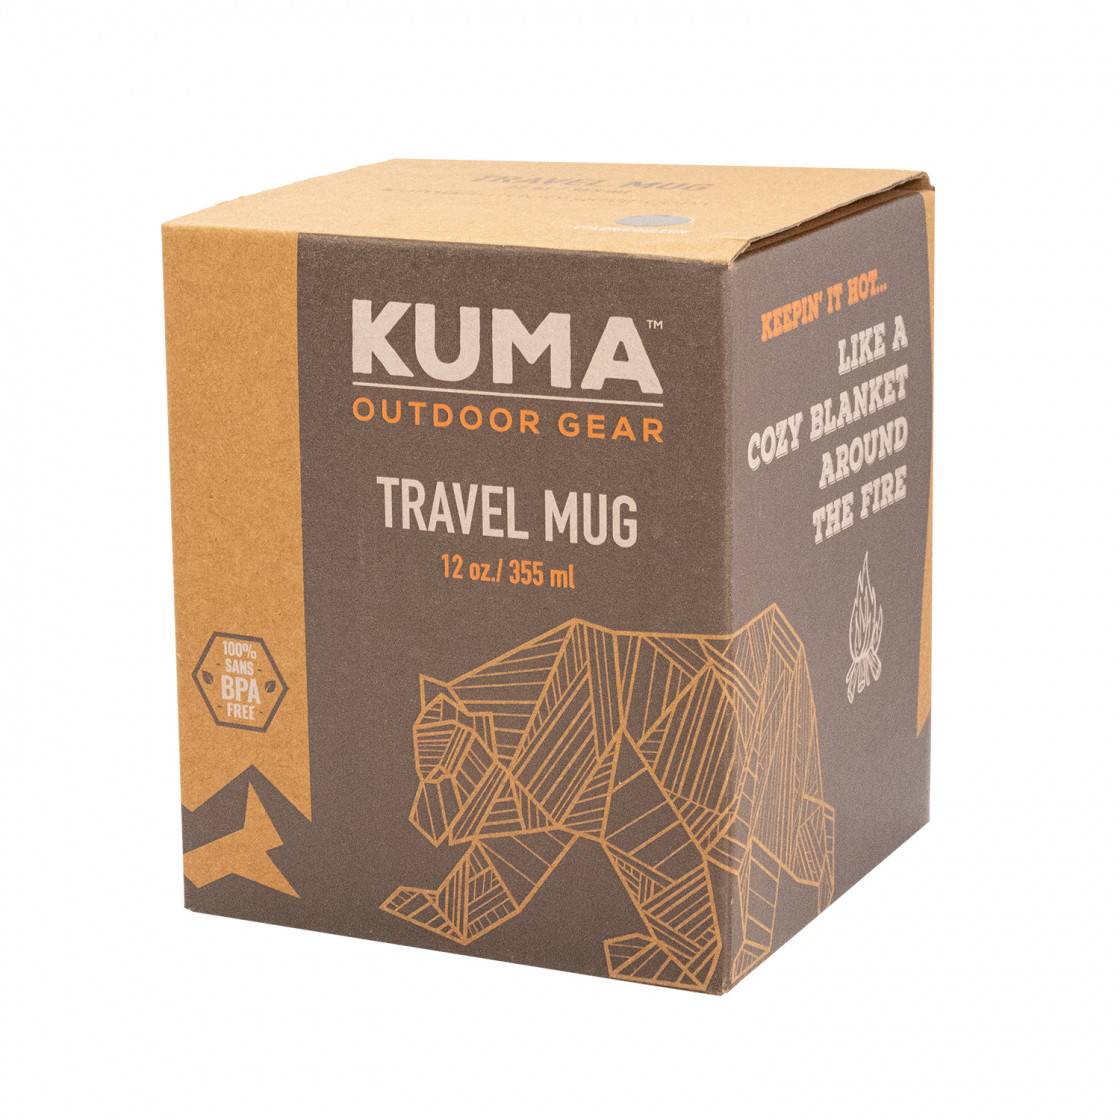 Kuma Outdoor Gear Qualifies for Free Shipping Kuma Outdoor Gear Travel Mug 12 oz Blue #KM-TM-BL